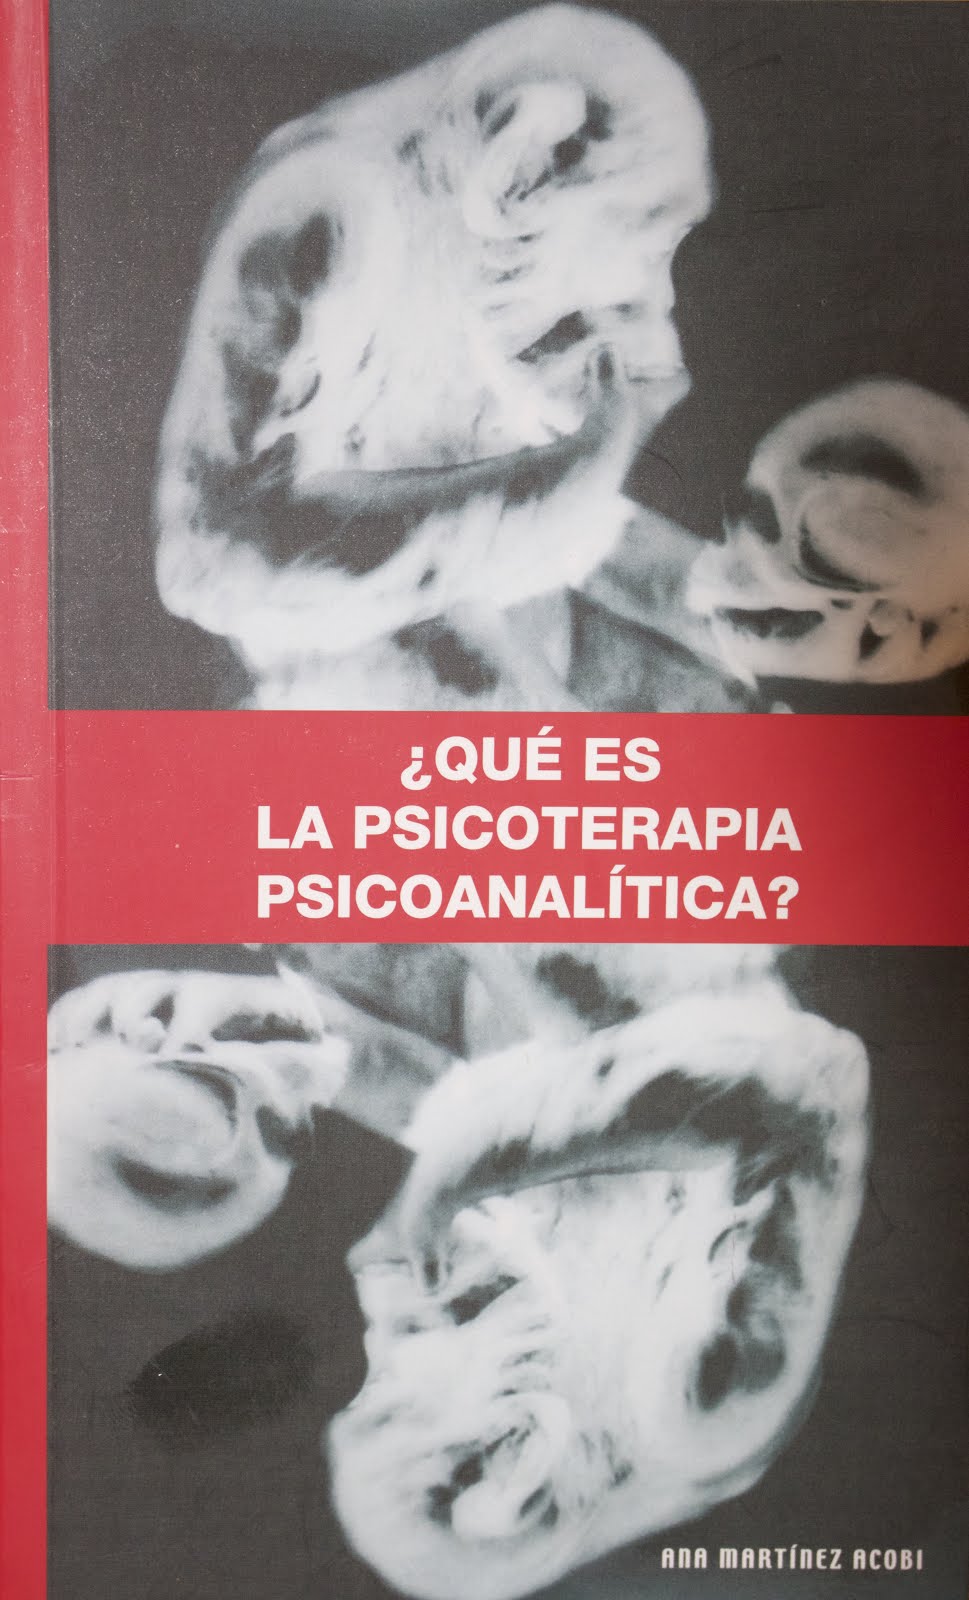 Ana Martínez Acobi´s Book